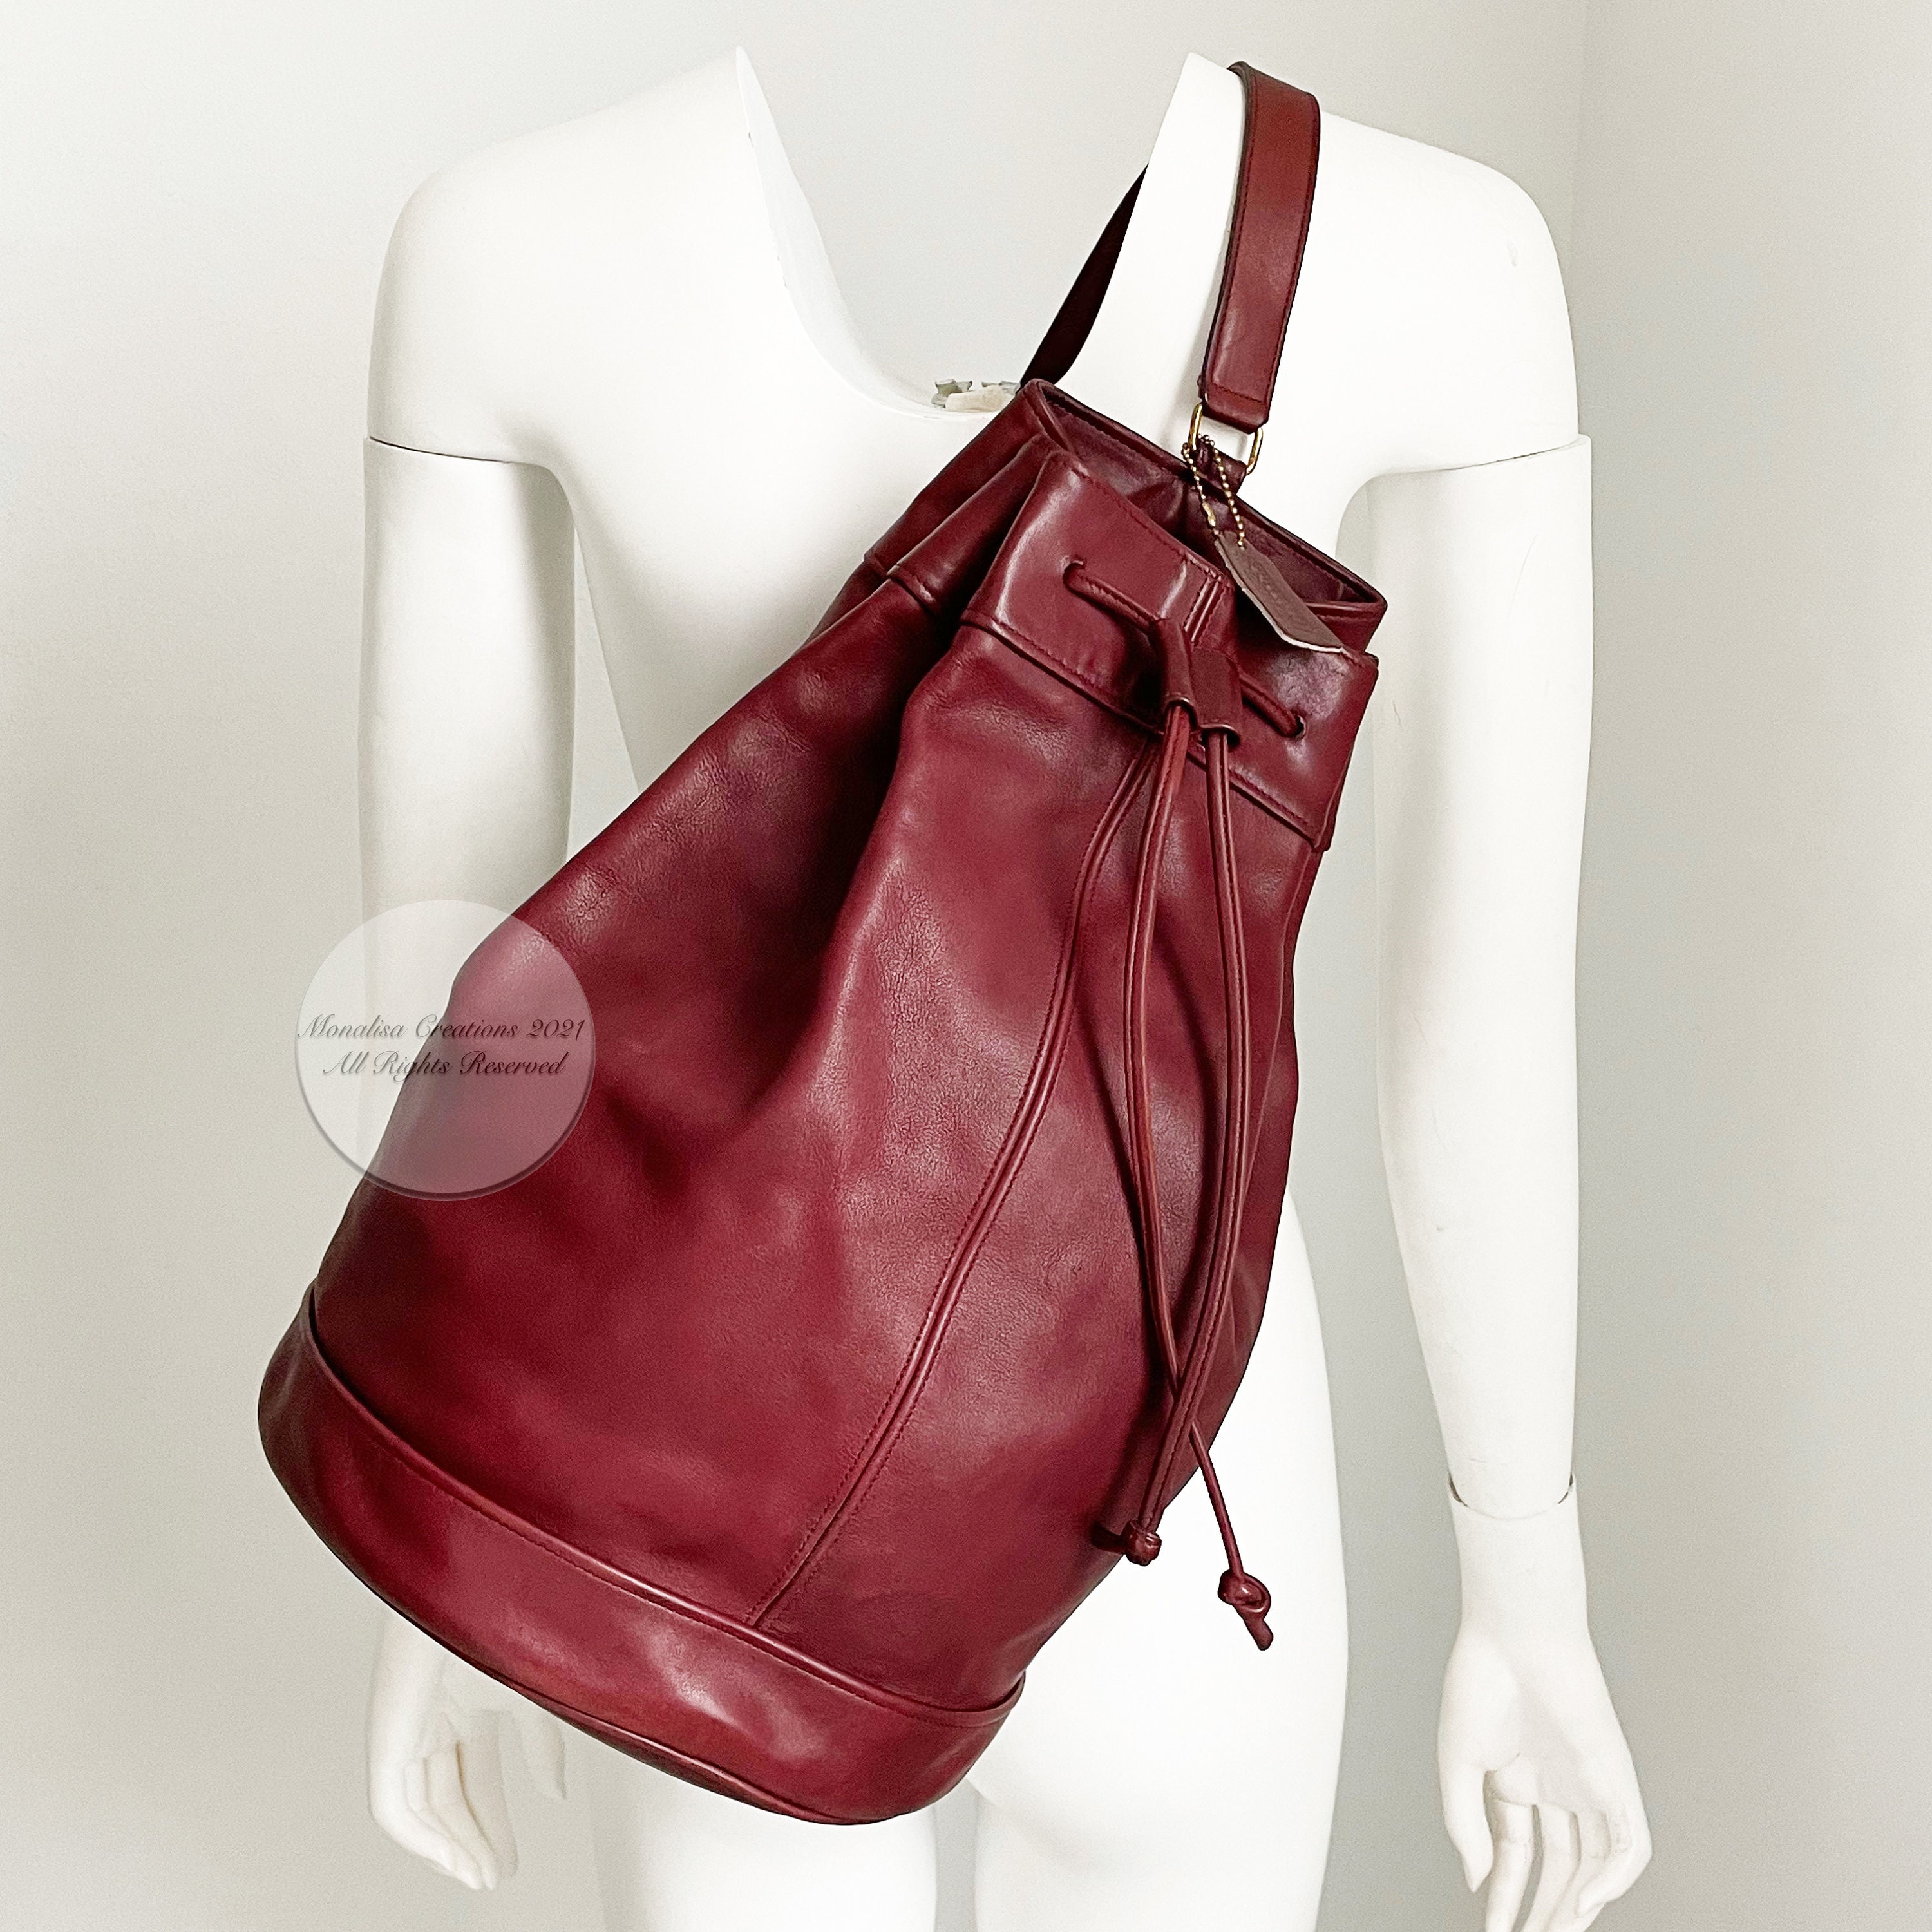 Coach 2008 Leatherware Gift Sack Bag Rope Handles 9.75 x 7.75 x